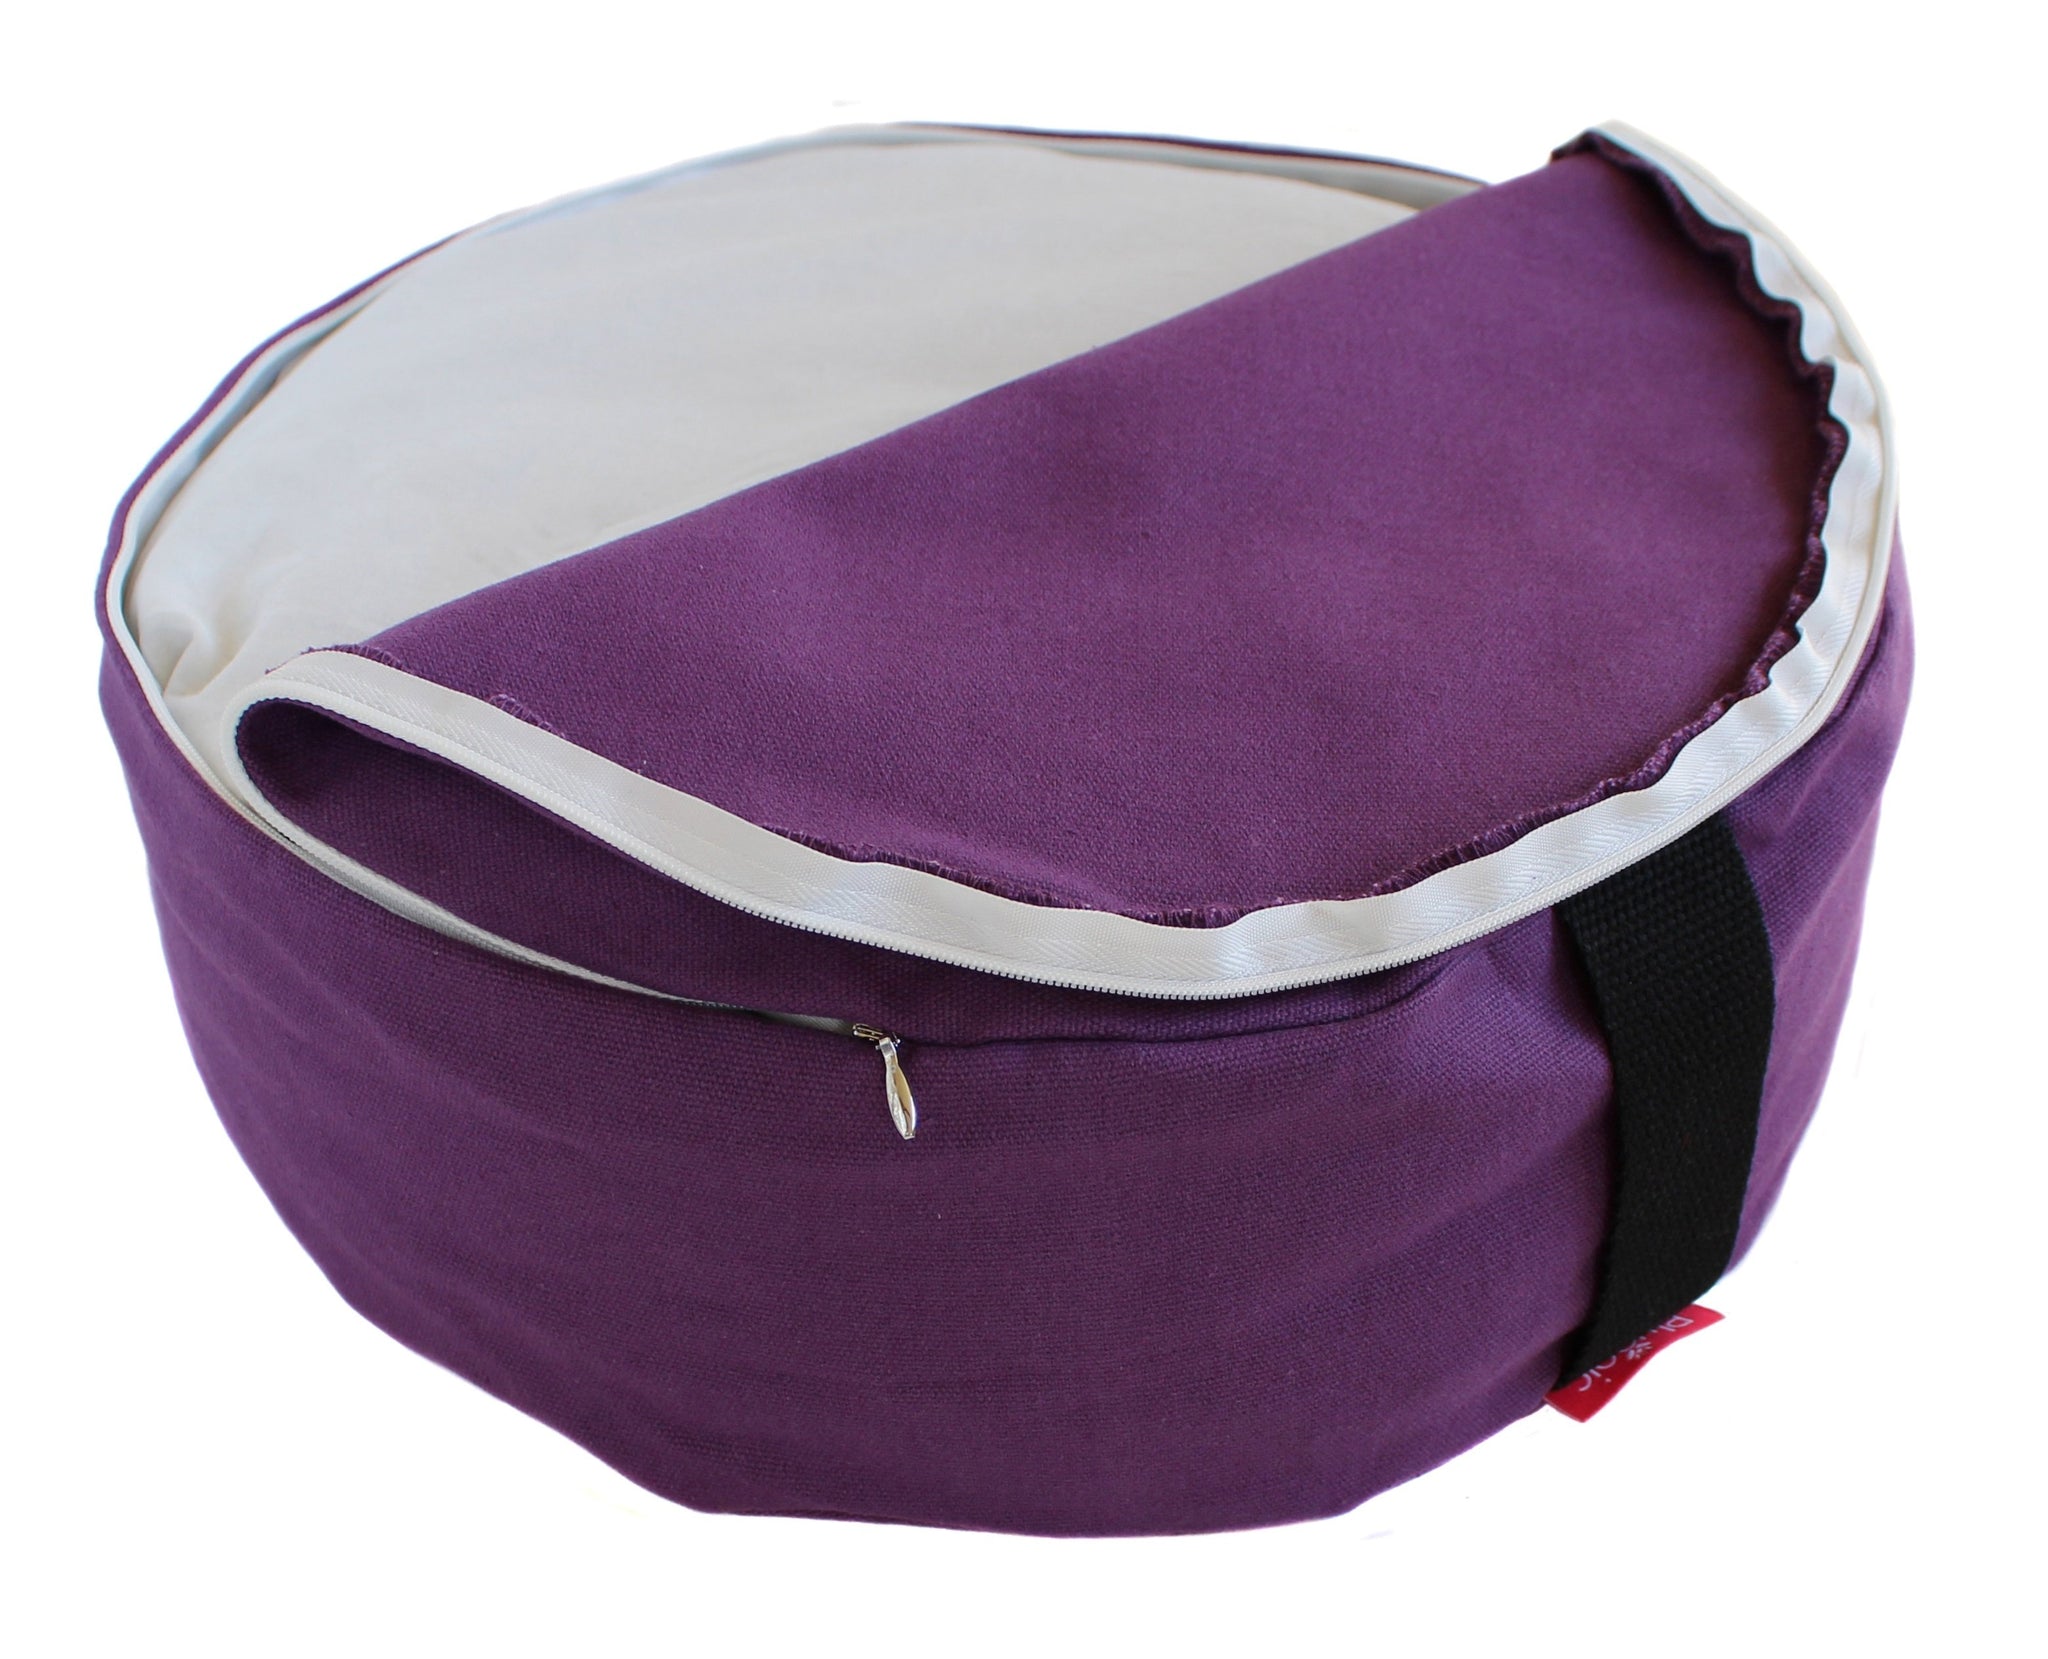 Plyopic-Zafu Meditation Cushion (Purple)-Meditation Cushion With Removable Washable Cover